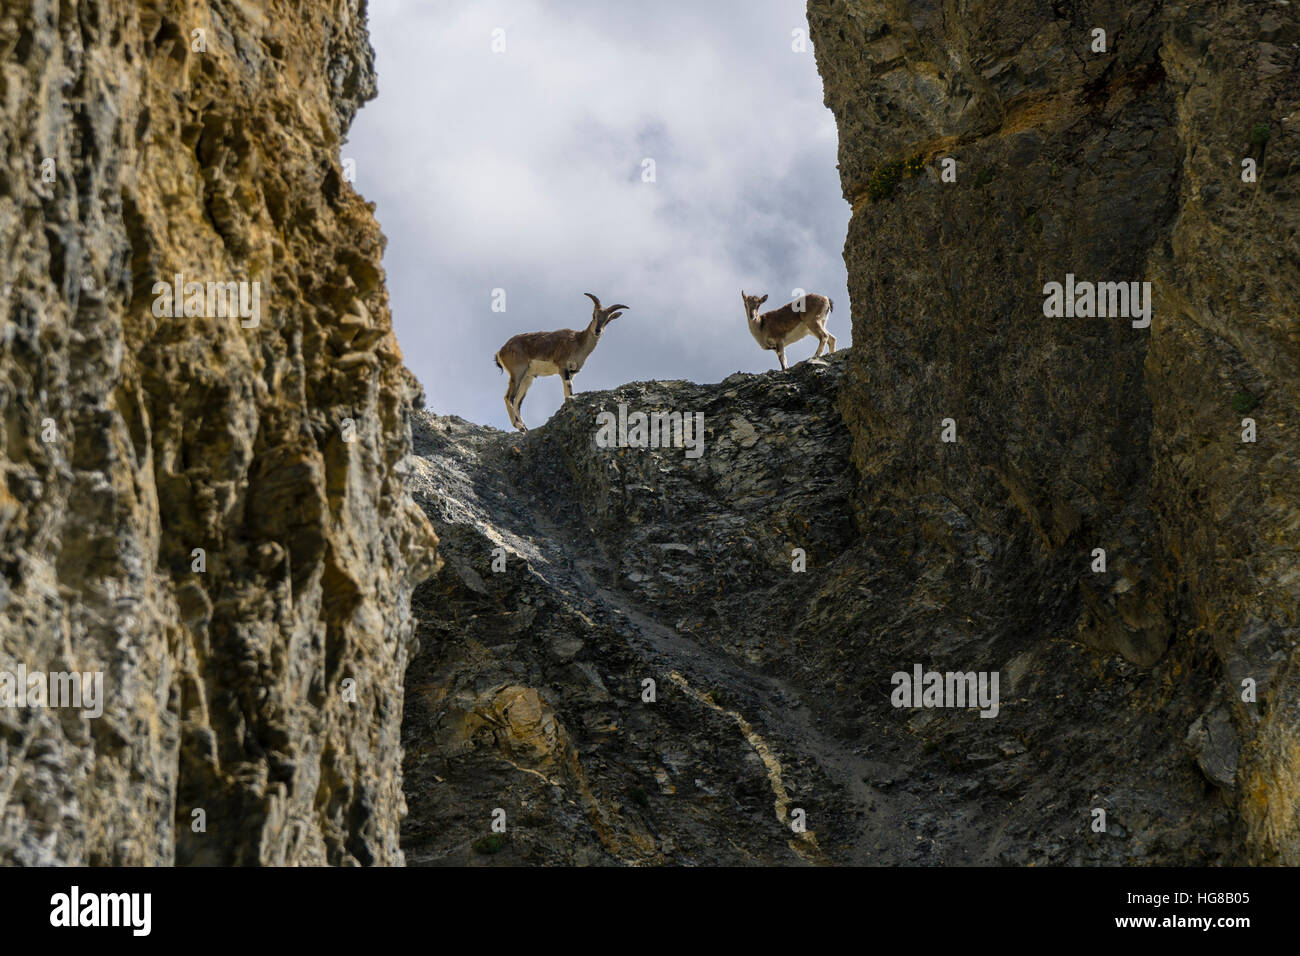 2 Blue Sheep, Bharal Pseudois nayaur (escalade) sont une zone rocheuse, Manang, District de Manang, Népal Banque D'Images